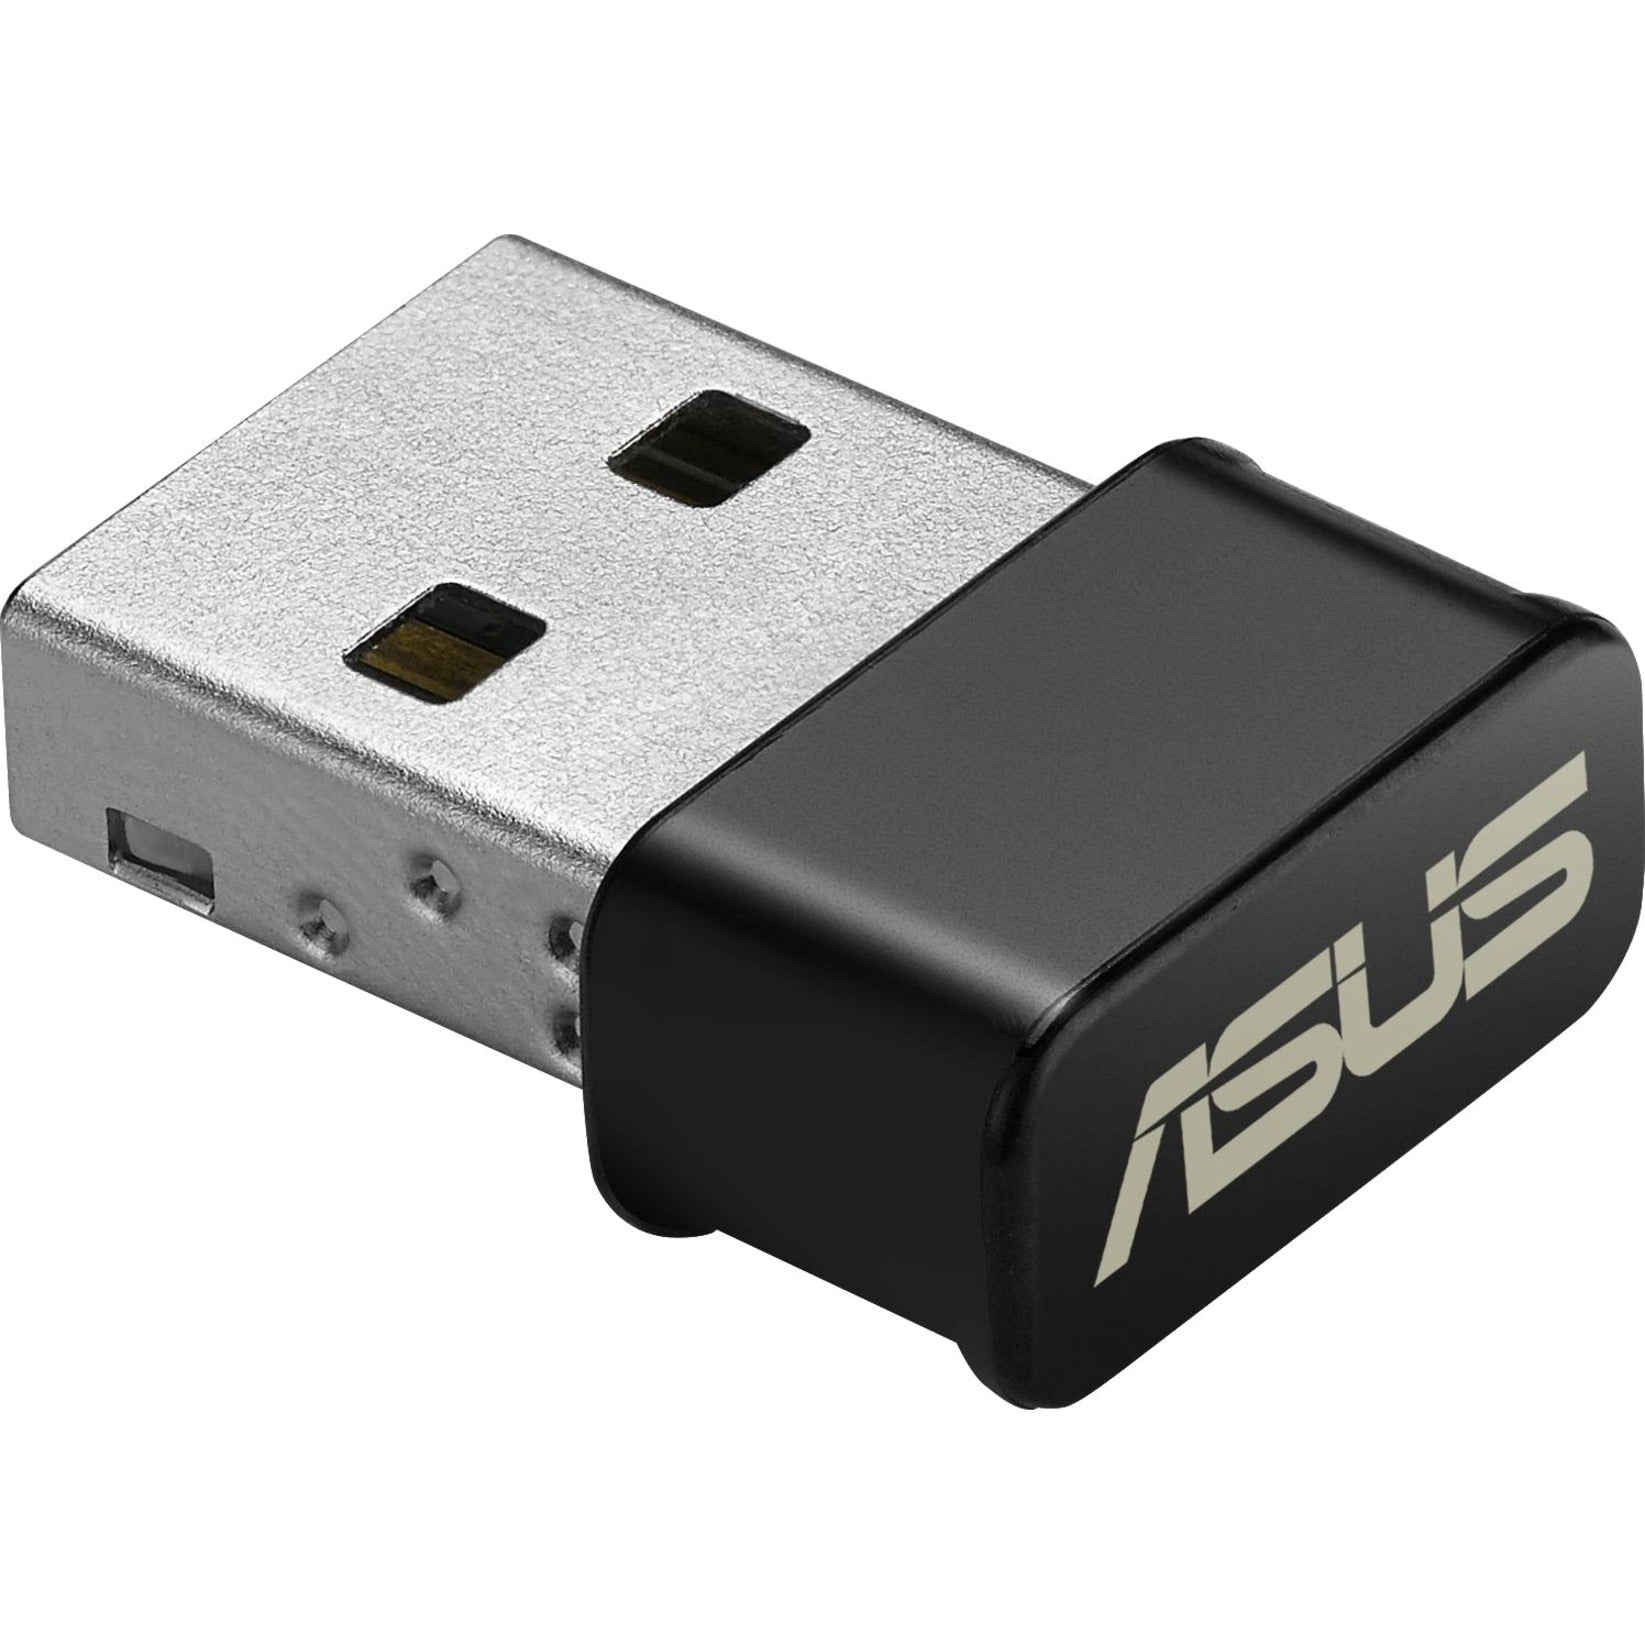 Asus USB-AC53 NANO AC1200 Dual-band USB Wi-Fi Adapter, 1.17 Gbit/s Wireless Transmission Speed